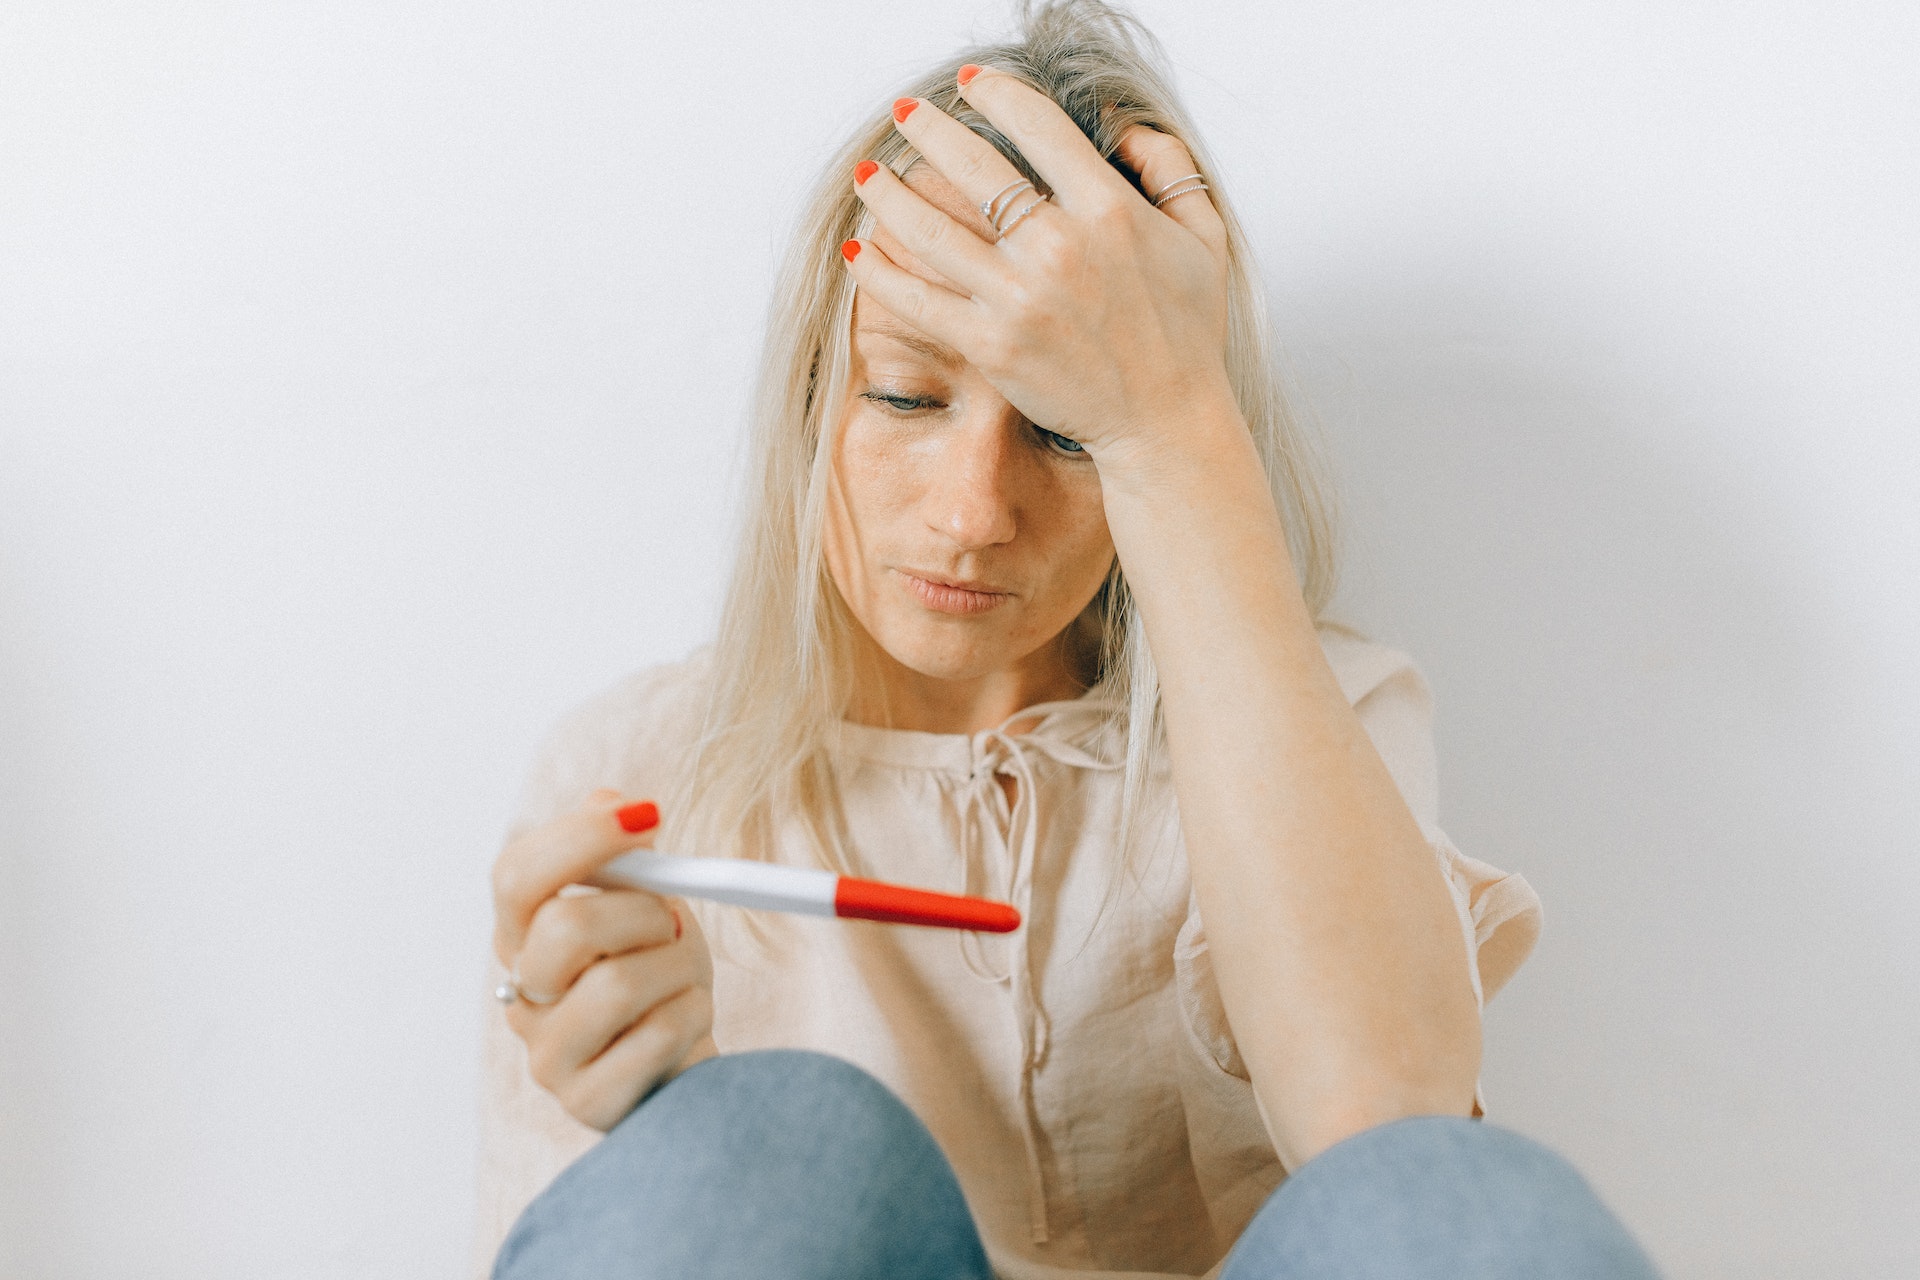 A woman holding a pregnancy testing kit | Source: Pexels